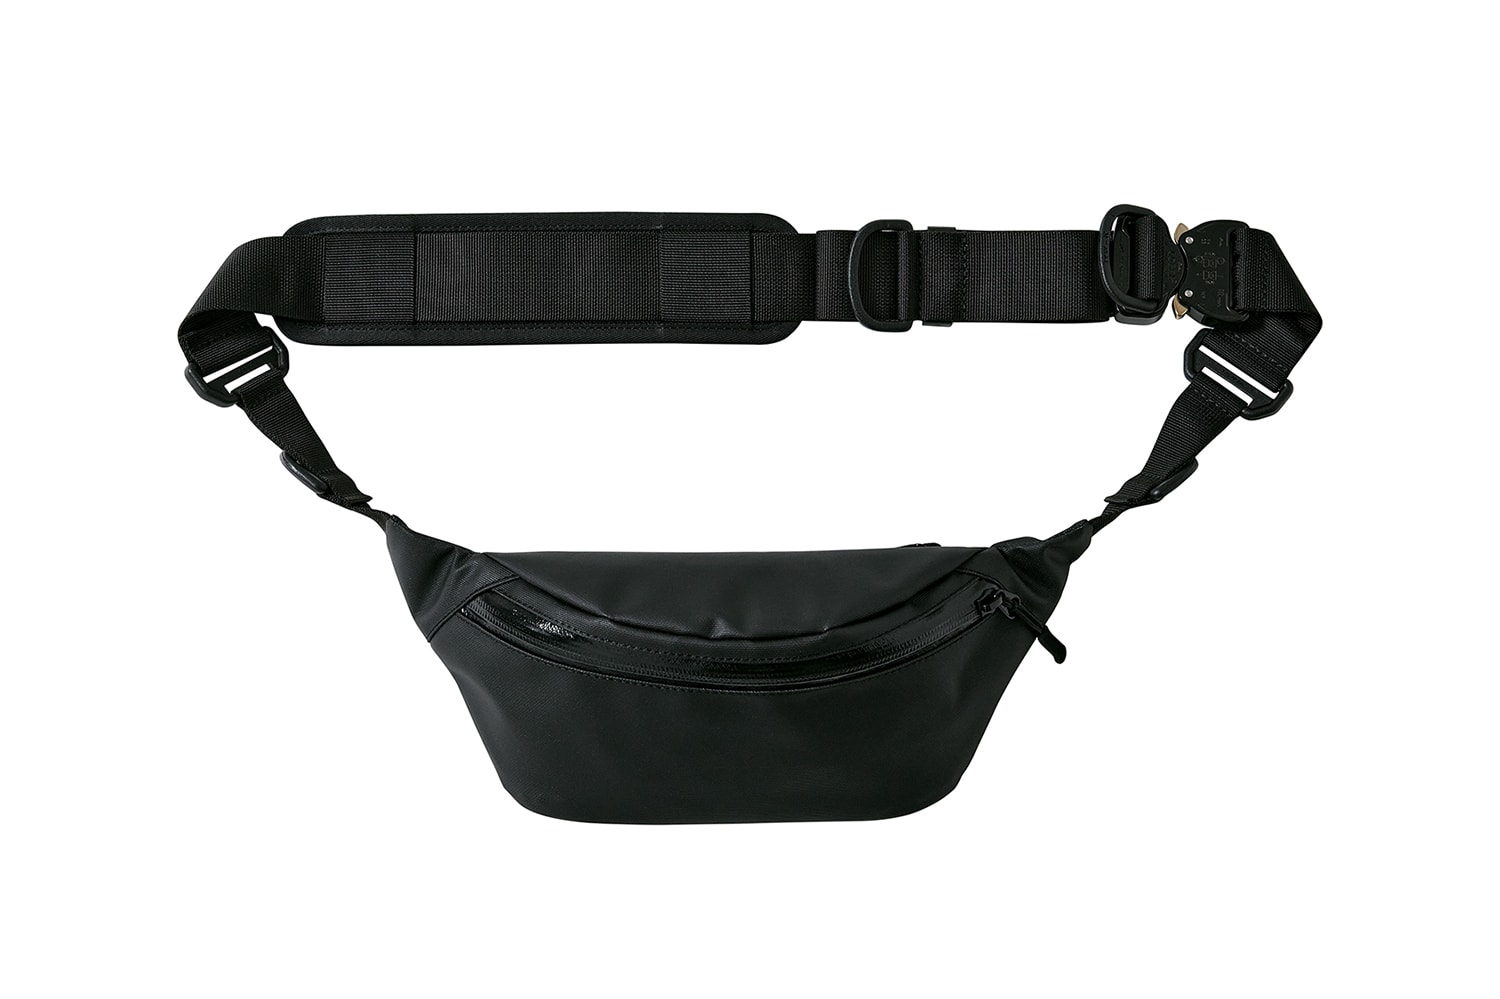 Bagjack x Eliminator Technical Bag Capsule nylon codura Cobra buckles waterproof Japan Nylon bags fanny packs belts packs hip bags fashion 